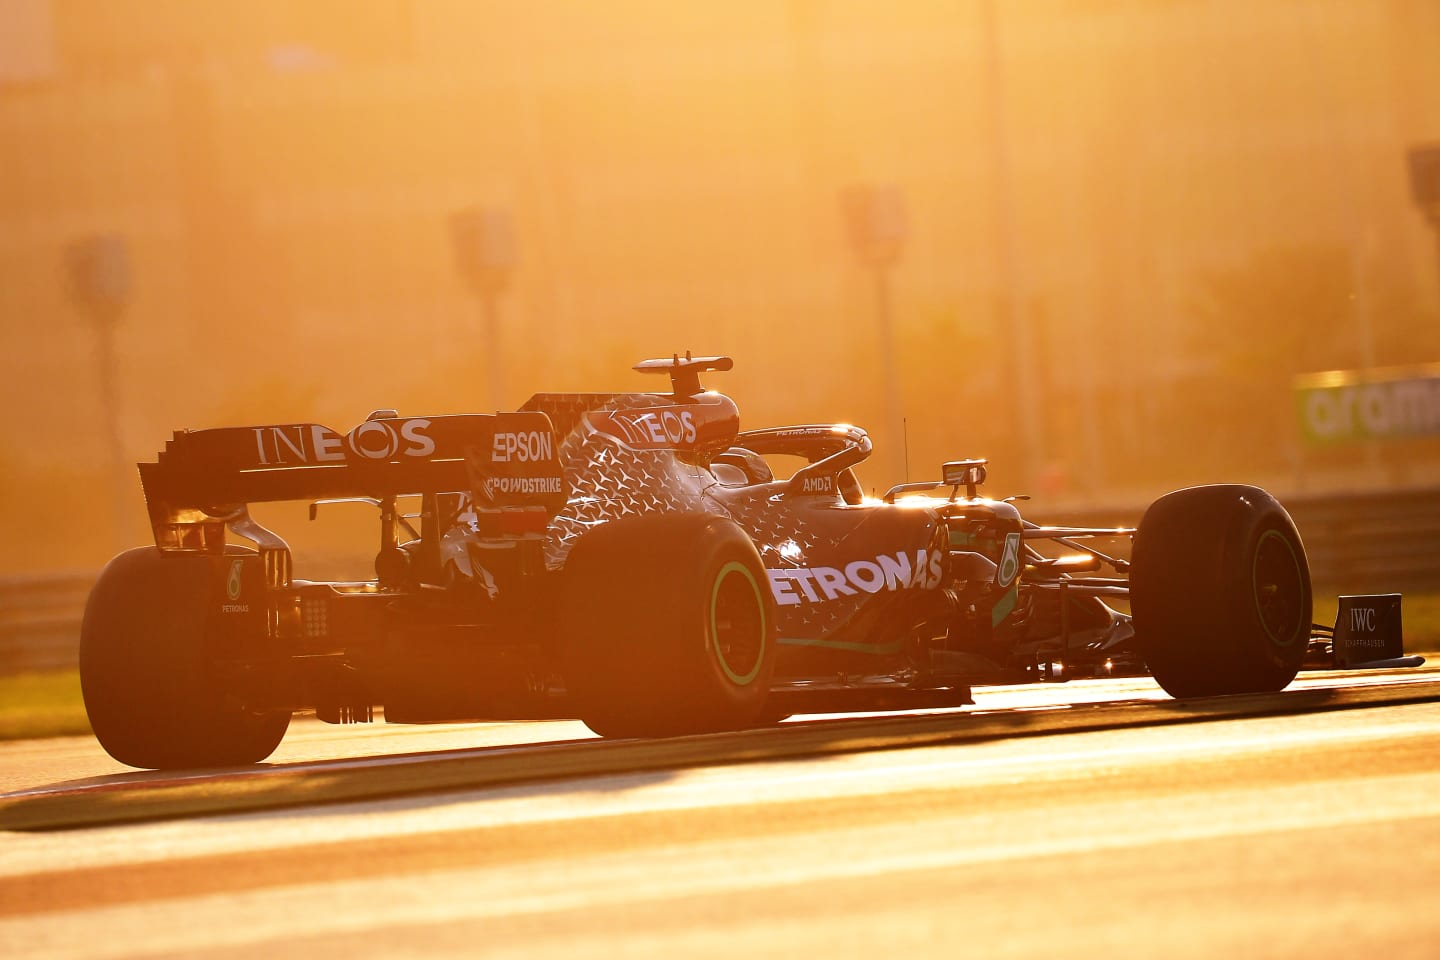 ABU DHABI, UNITED ARAB EMIRATES - DECEMBER 11: Lewis Hamilton of Great Britain driving the (44)